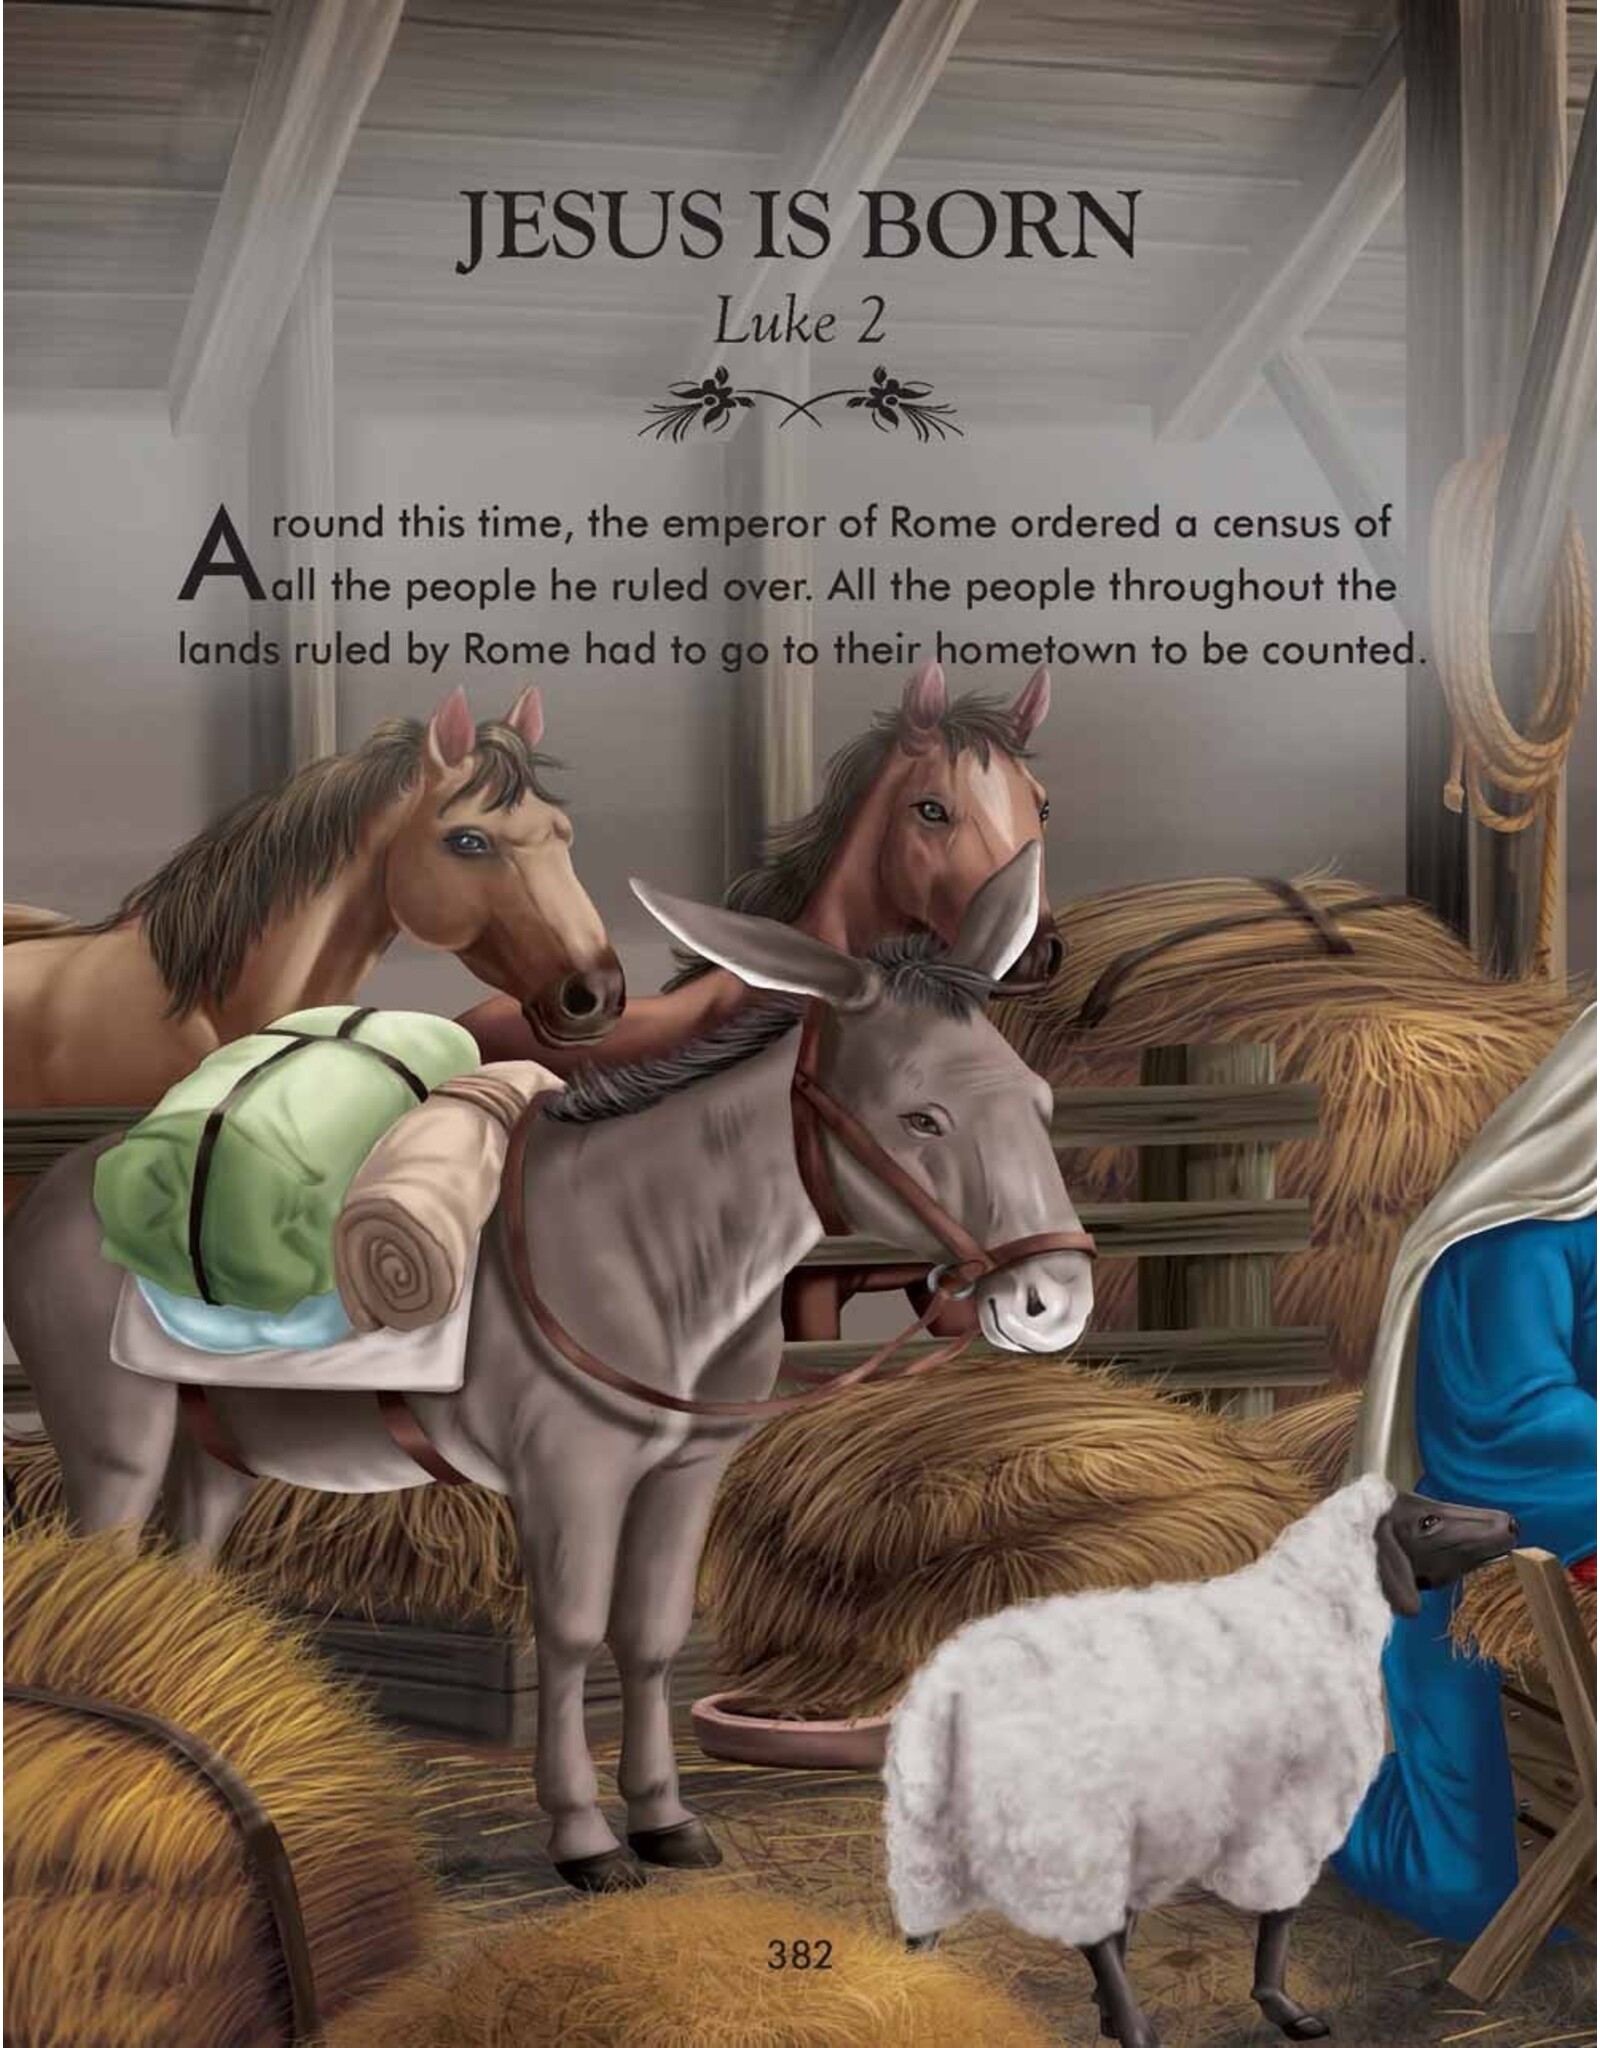 Harvest House Complete Illustrated  Children's Bible